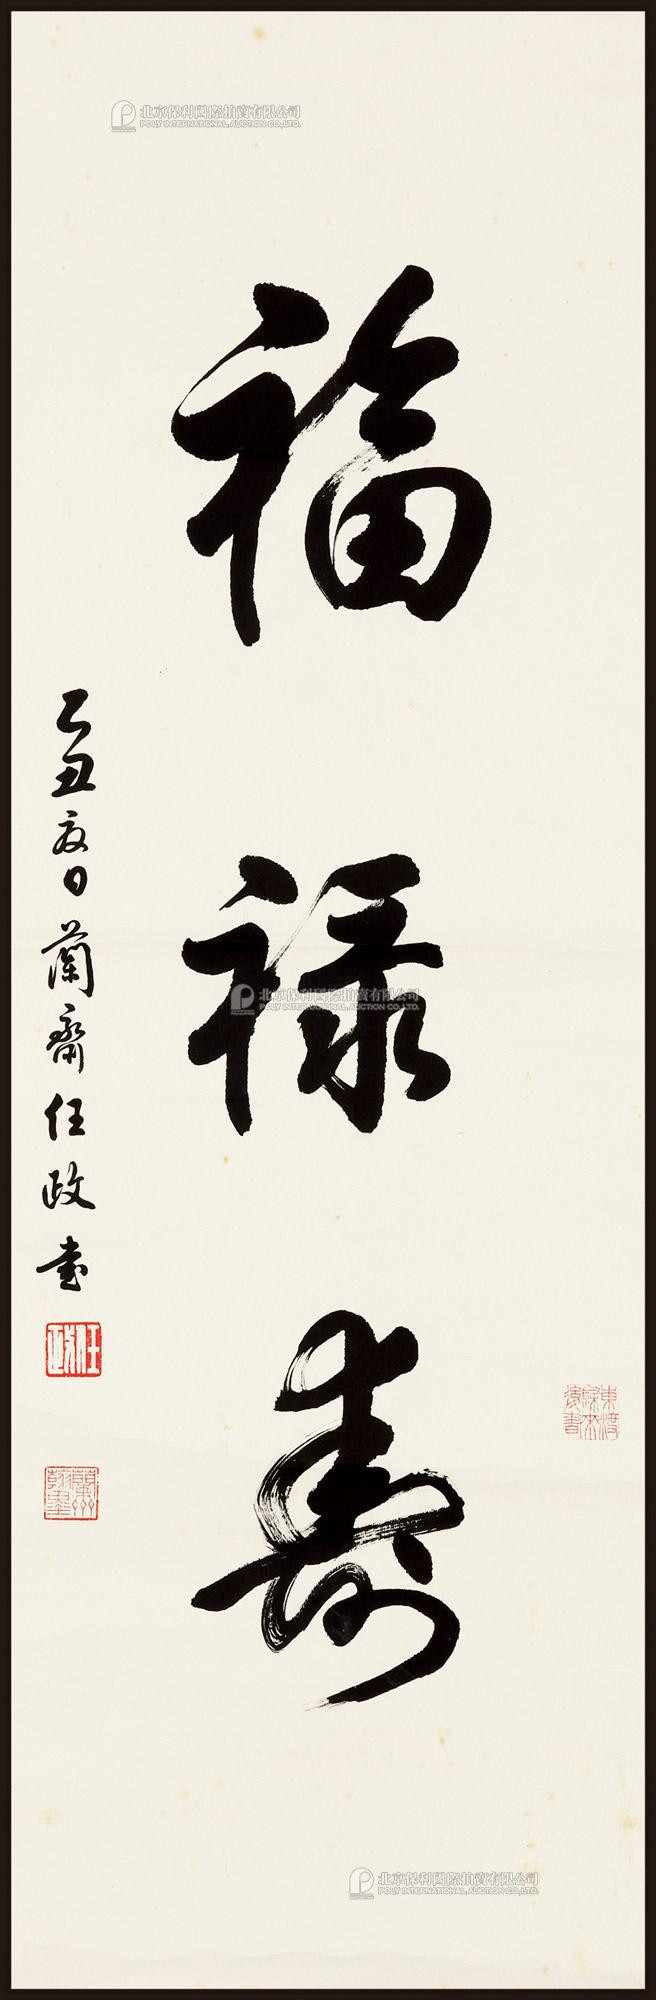 The calligraphy of Ren Zheng